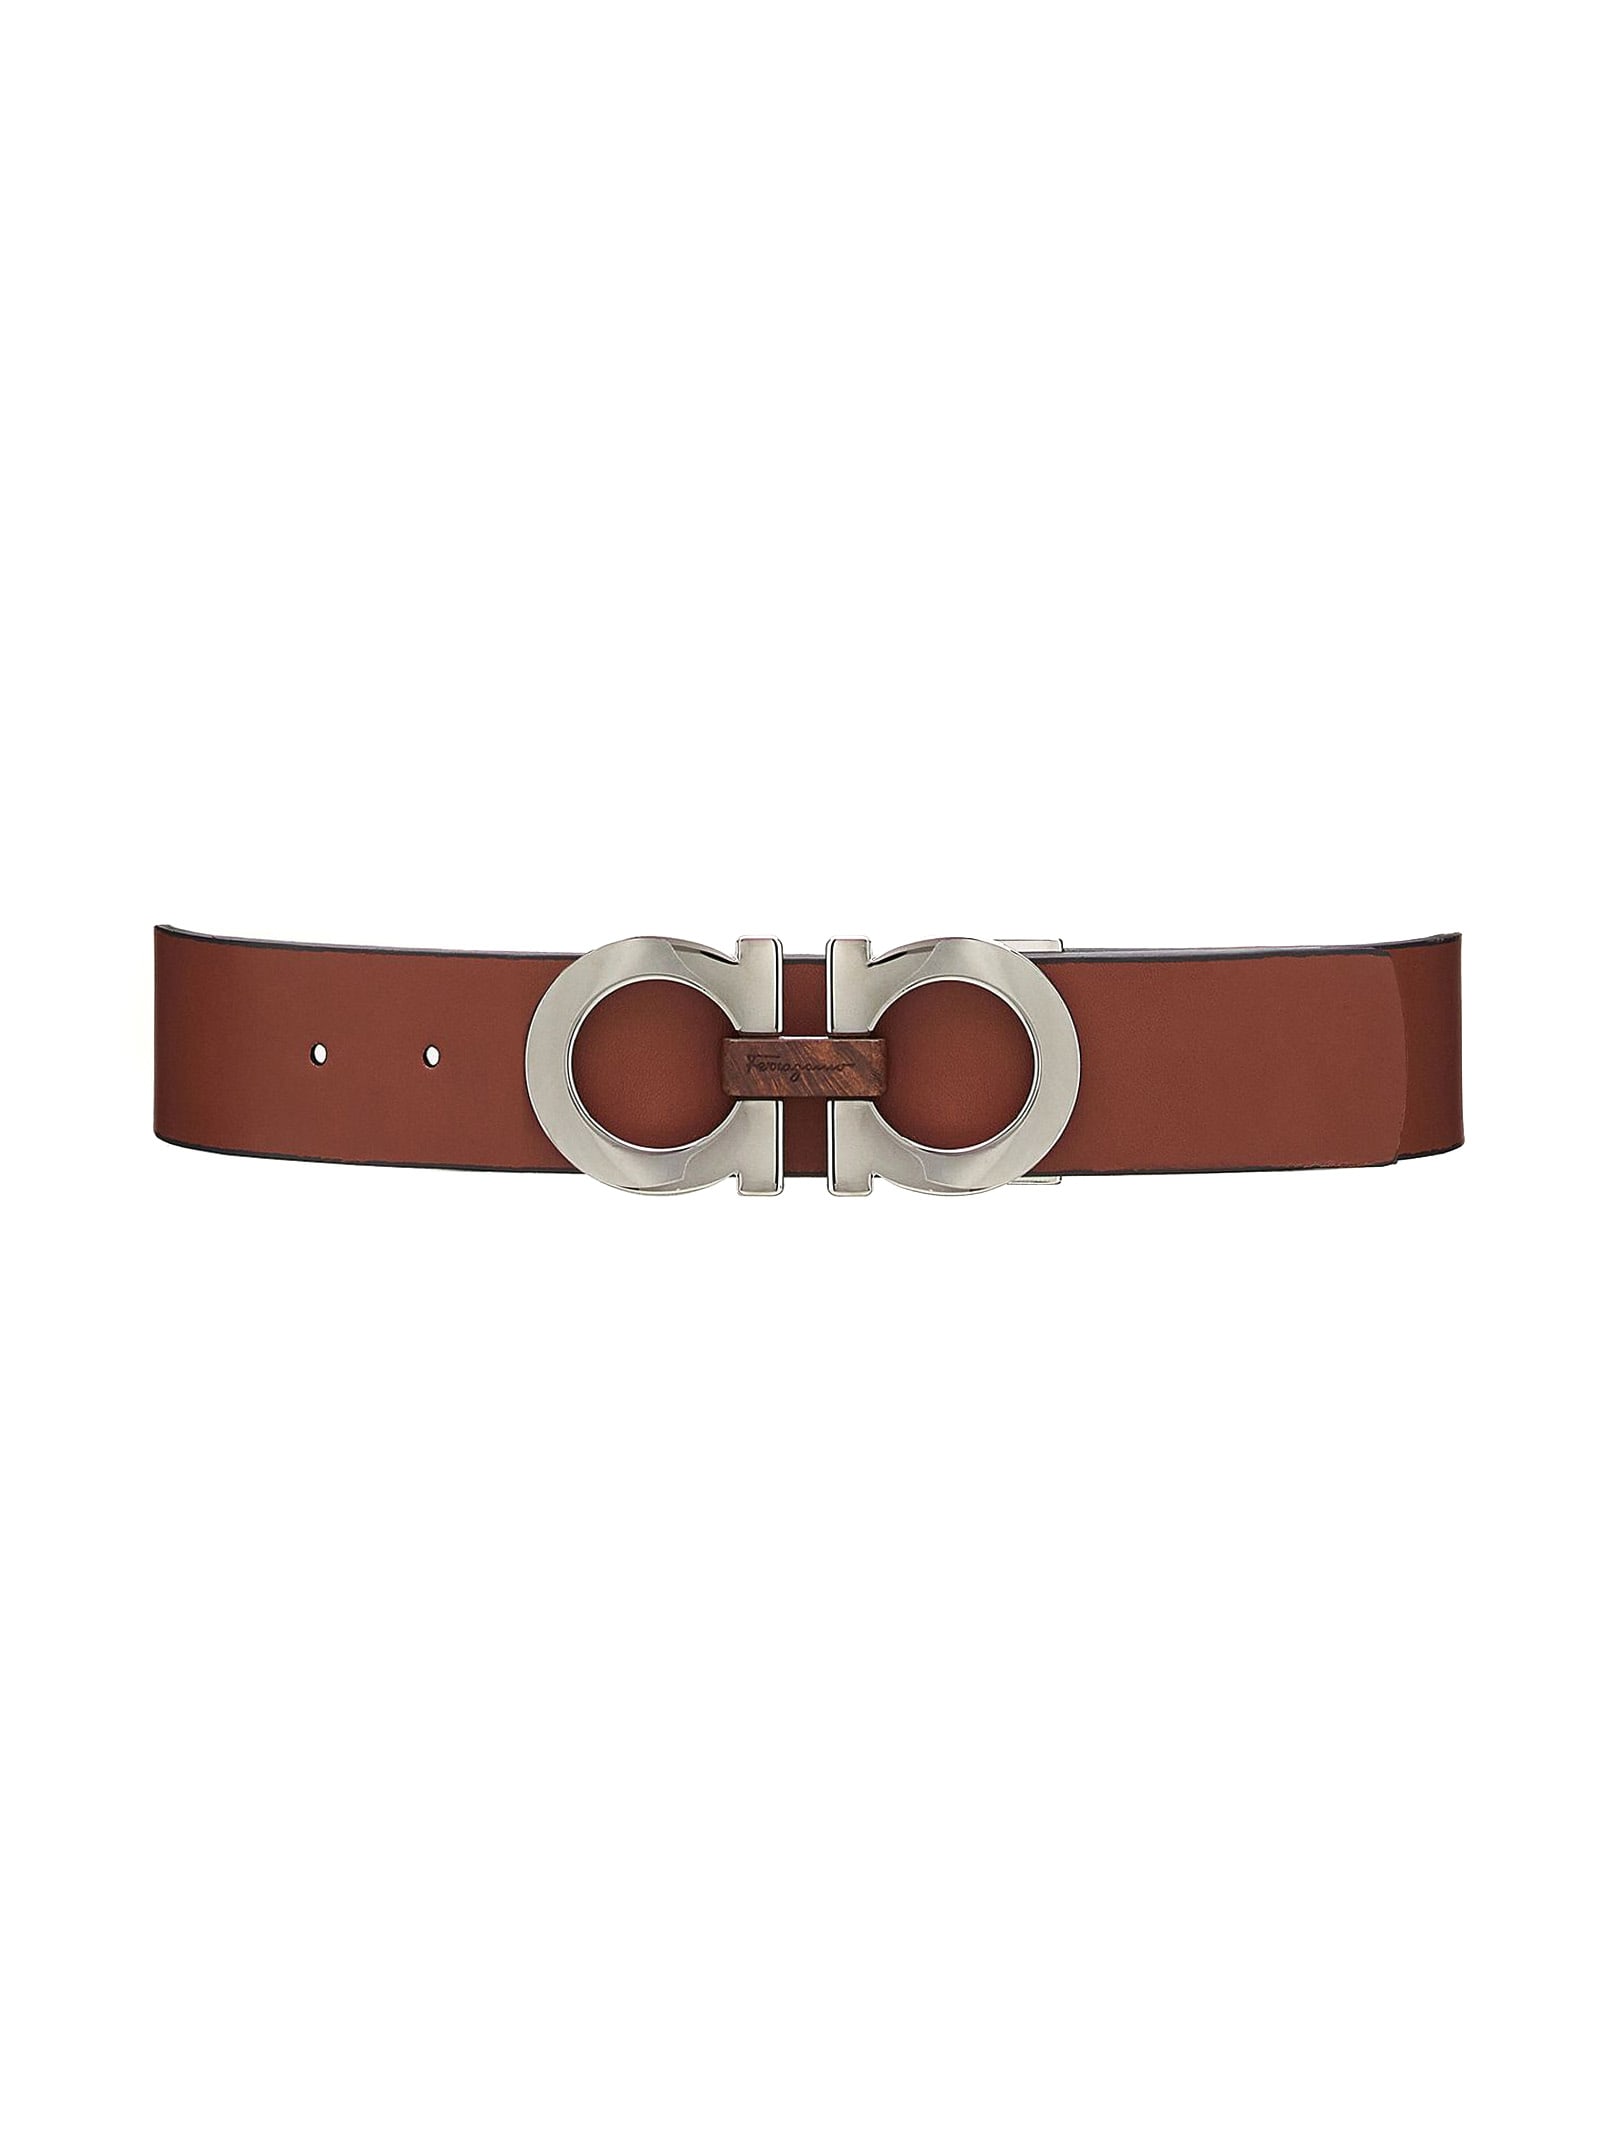 Salvatore Ferragamo Brown Leather Reversible Belt